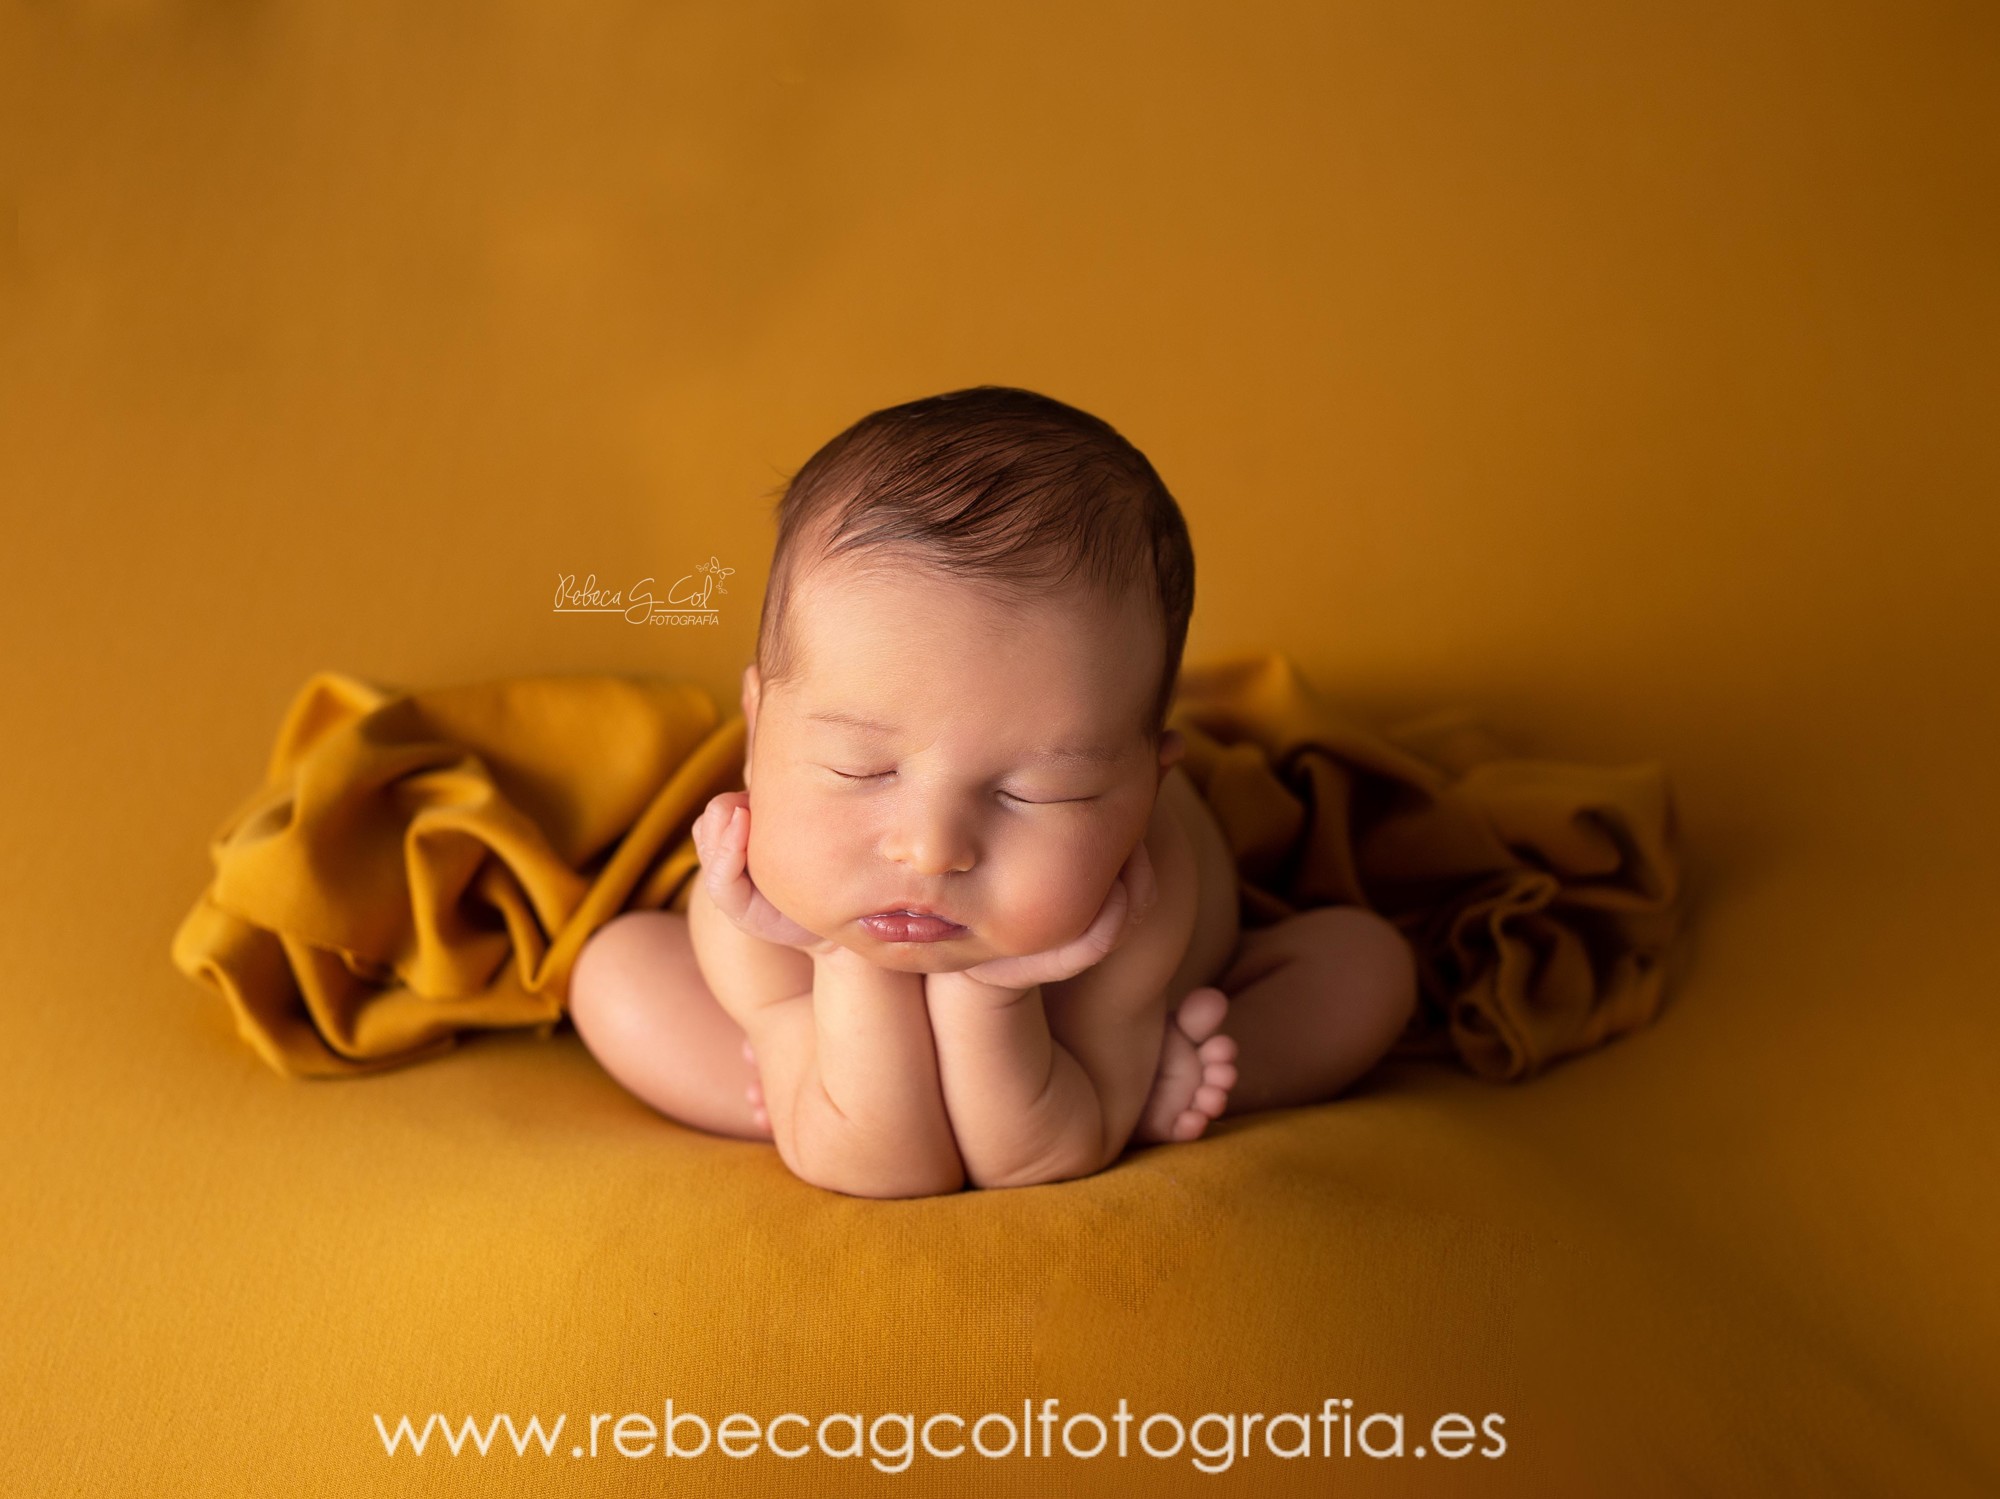 Rebeca GCol Fotografía - fotografia-recien-nacido-newborn-madrid-alcala-de-henares-168.jpg